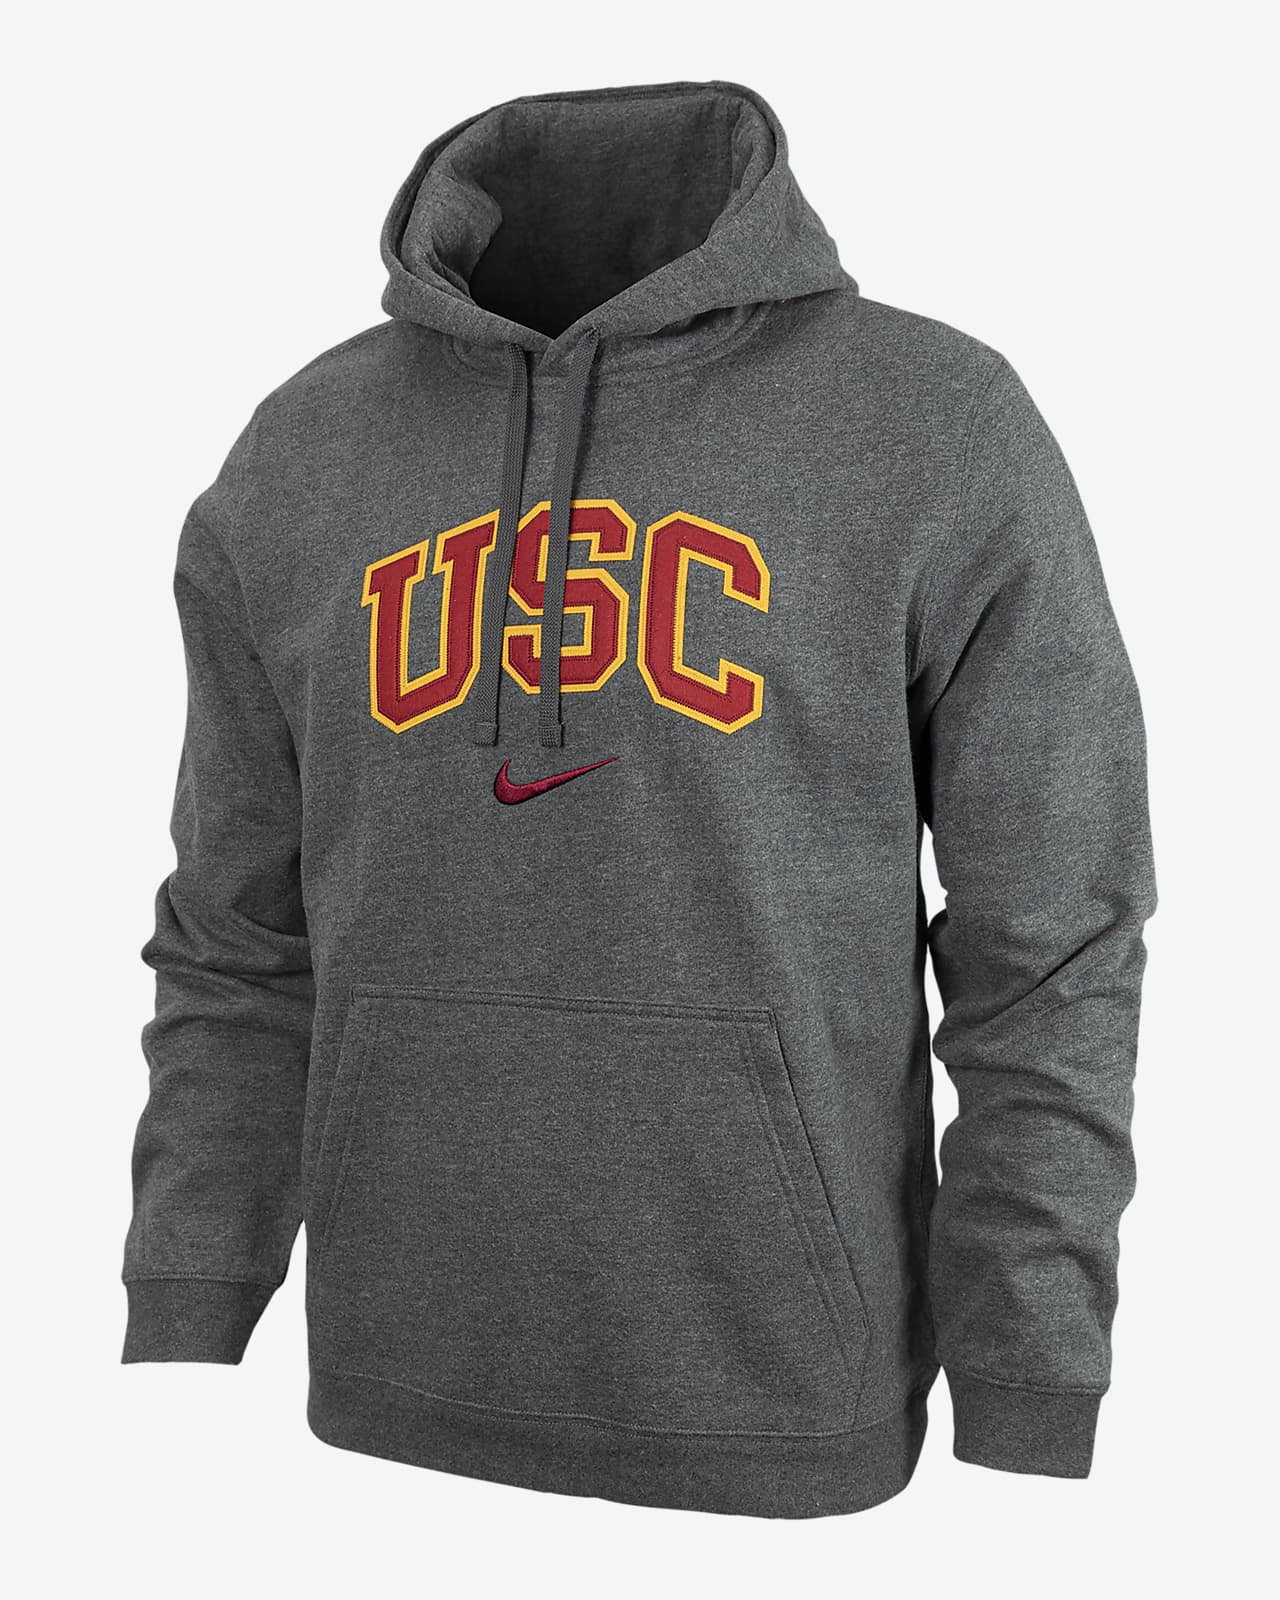 USC Club Fleece Men's Nike College Hoodie